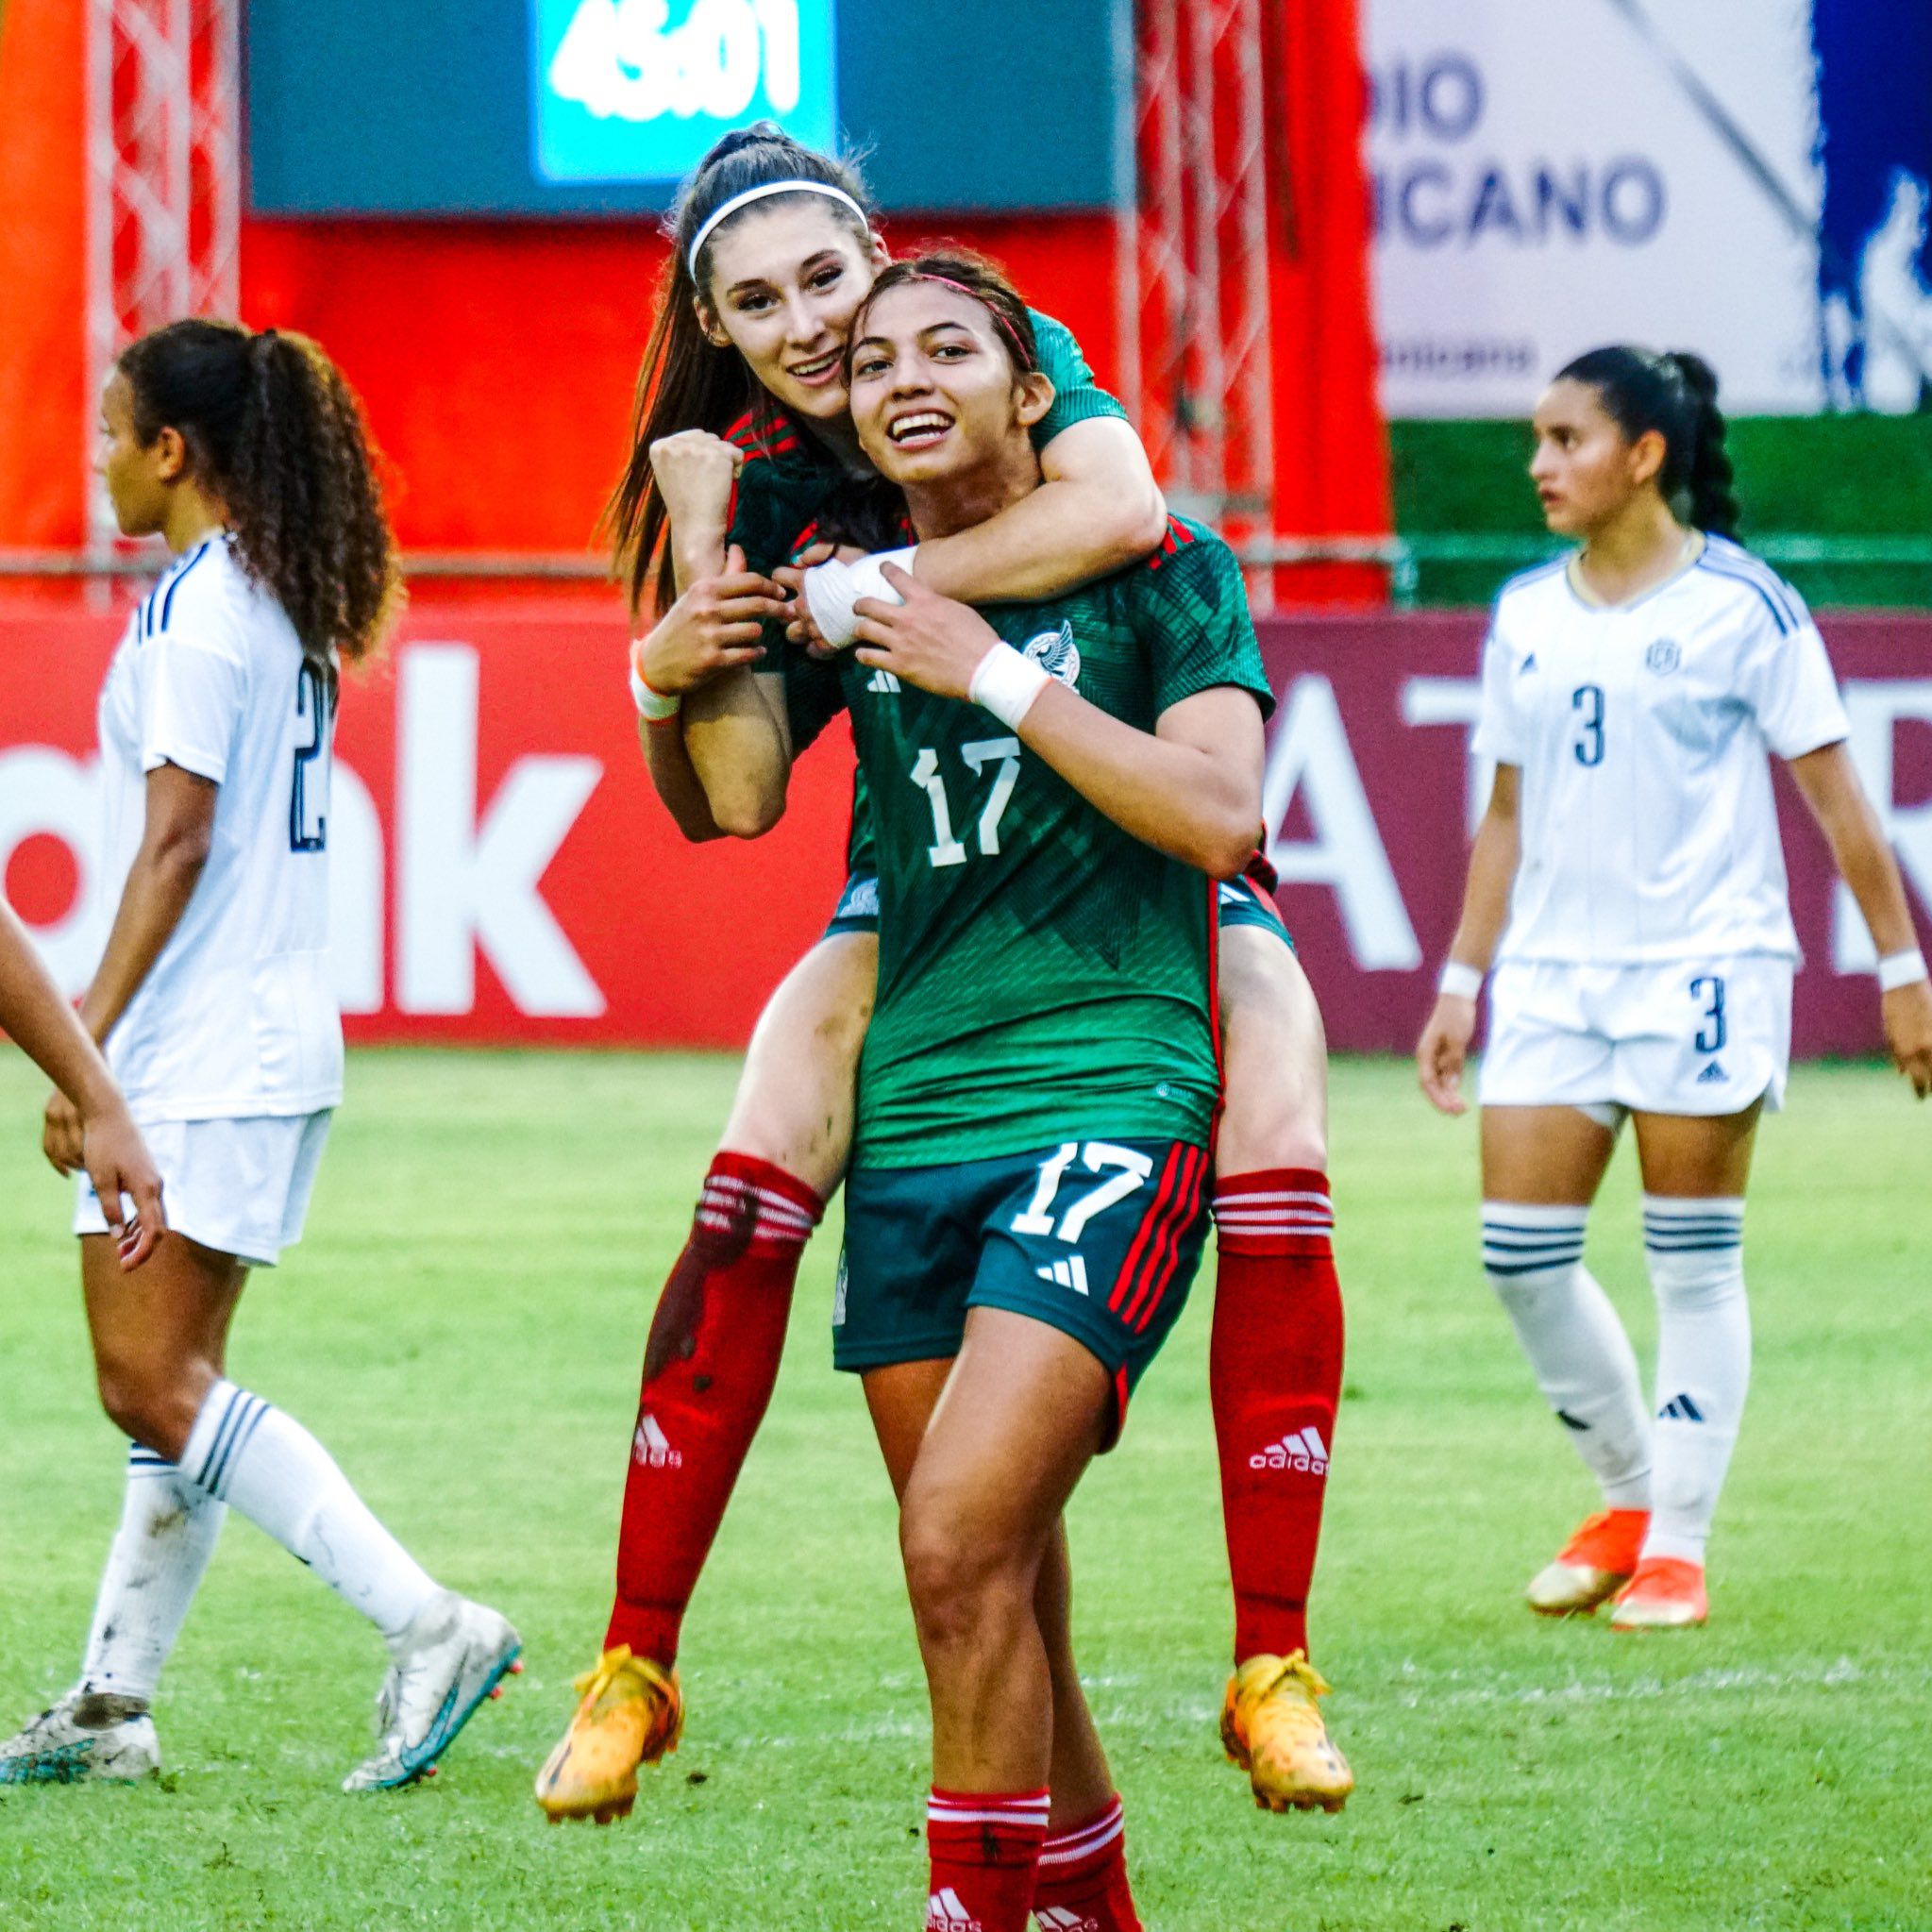 Festejos de gol ante Costa Rica

Foto: Twitter/Selección de México Femenil